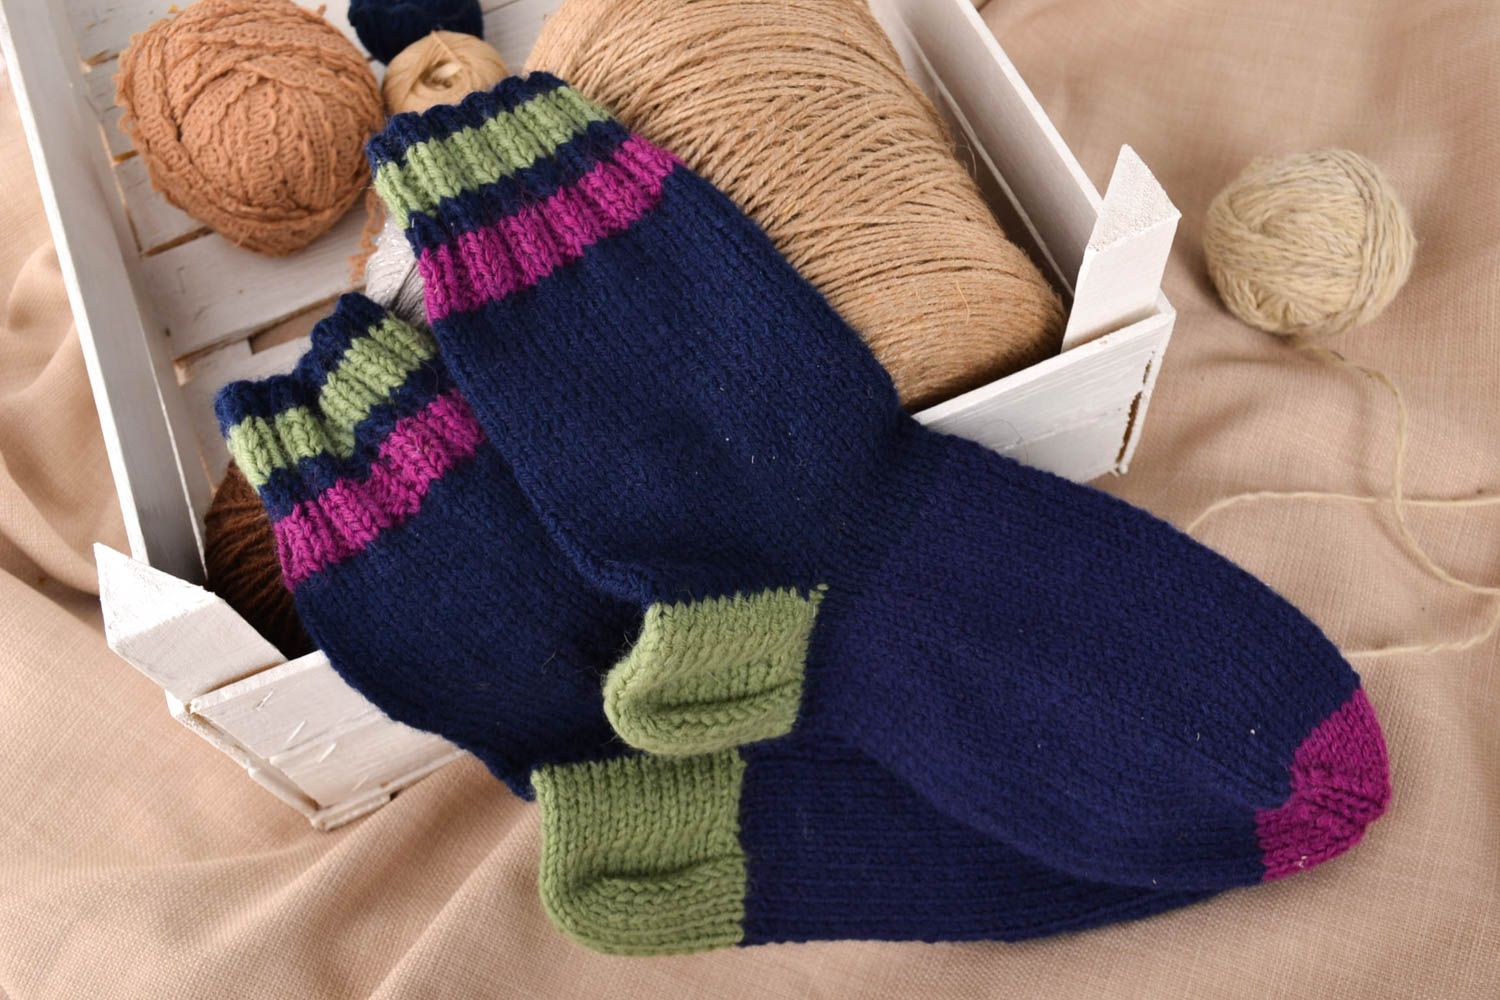 Stylish handmade knitted socks warm socks handmade accessories for girls photo 1